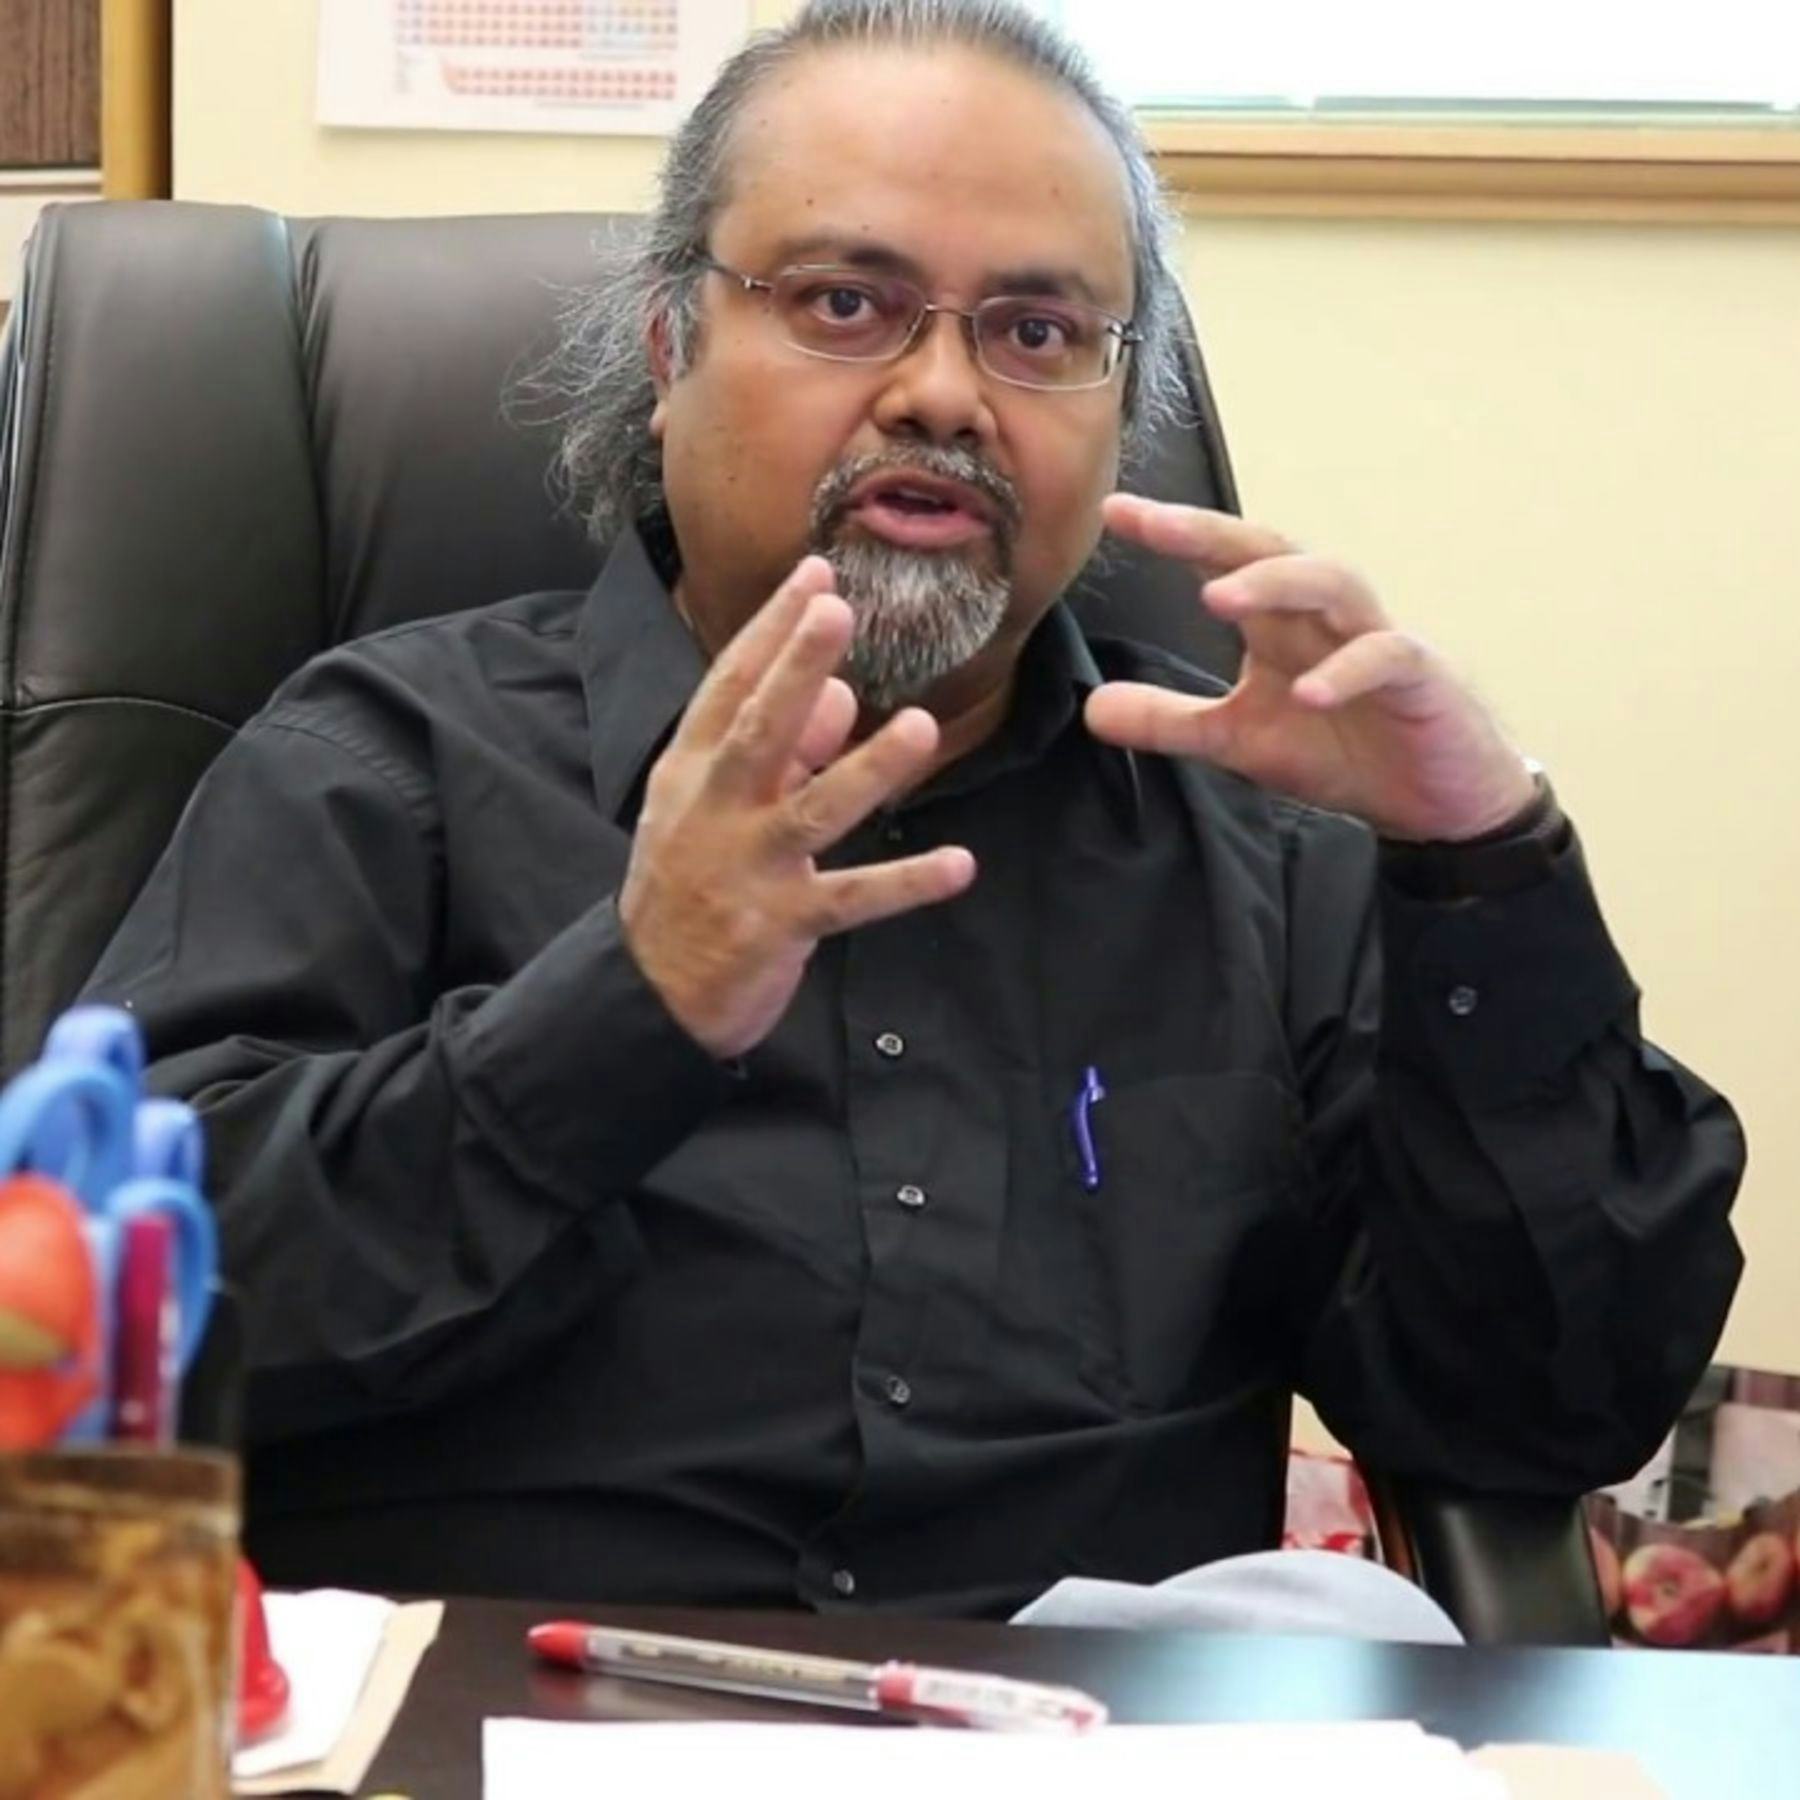 Professor Dibyendu Sarkar sitting at his desk explaining a concept